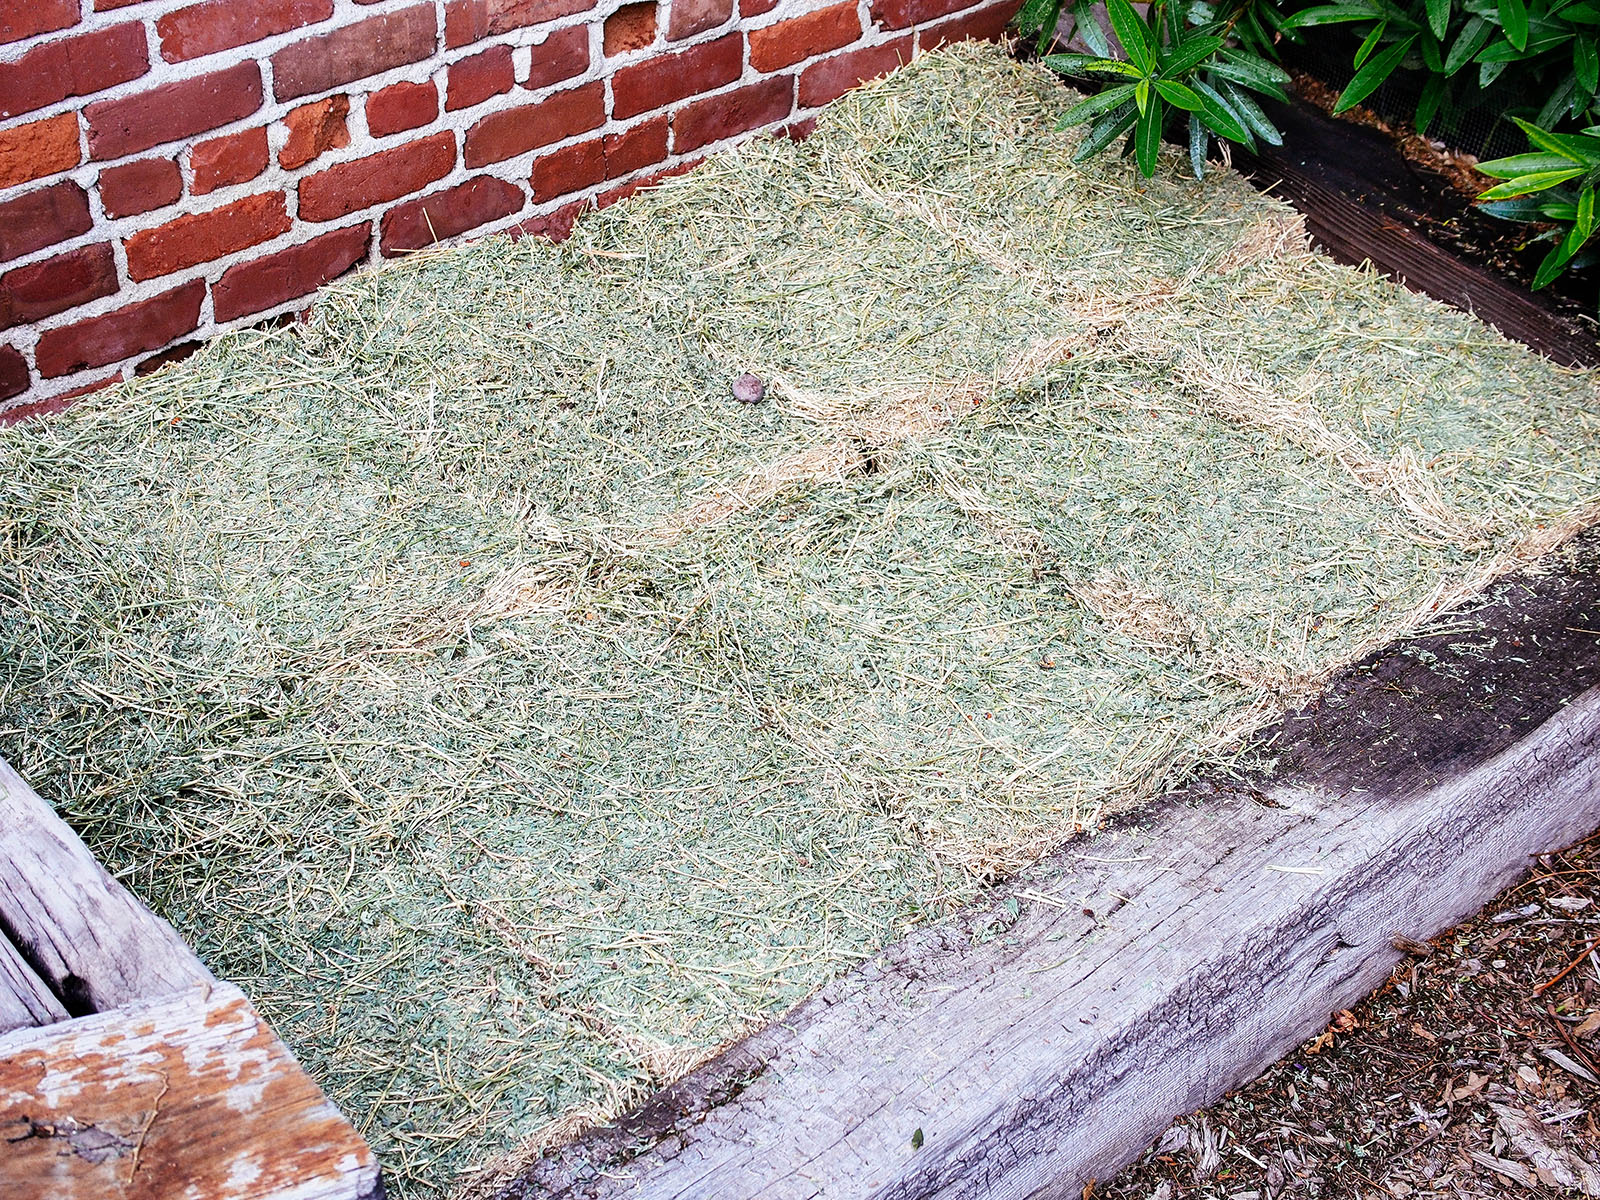 Alfalfa pads spread across raised bed